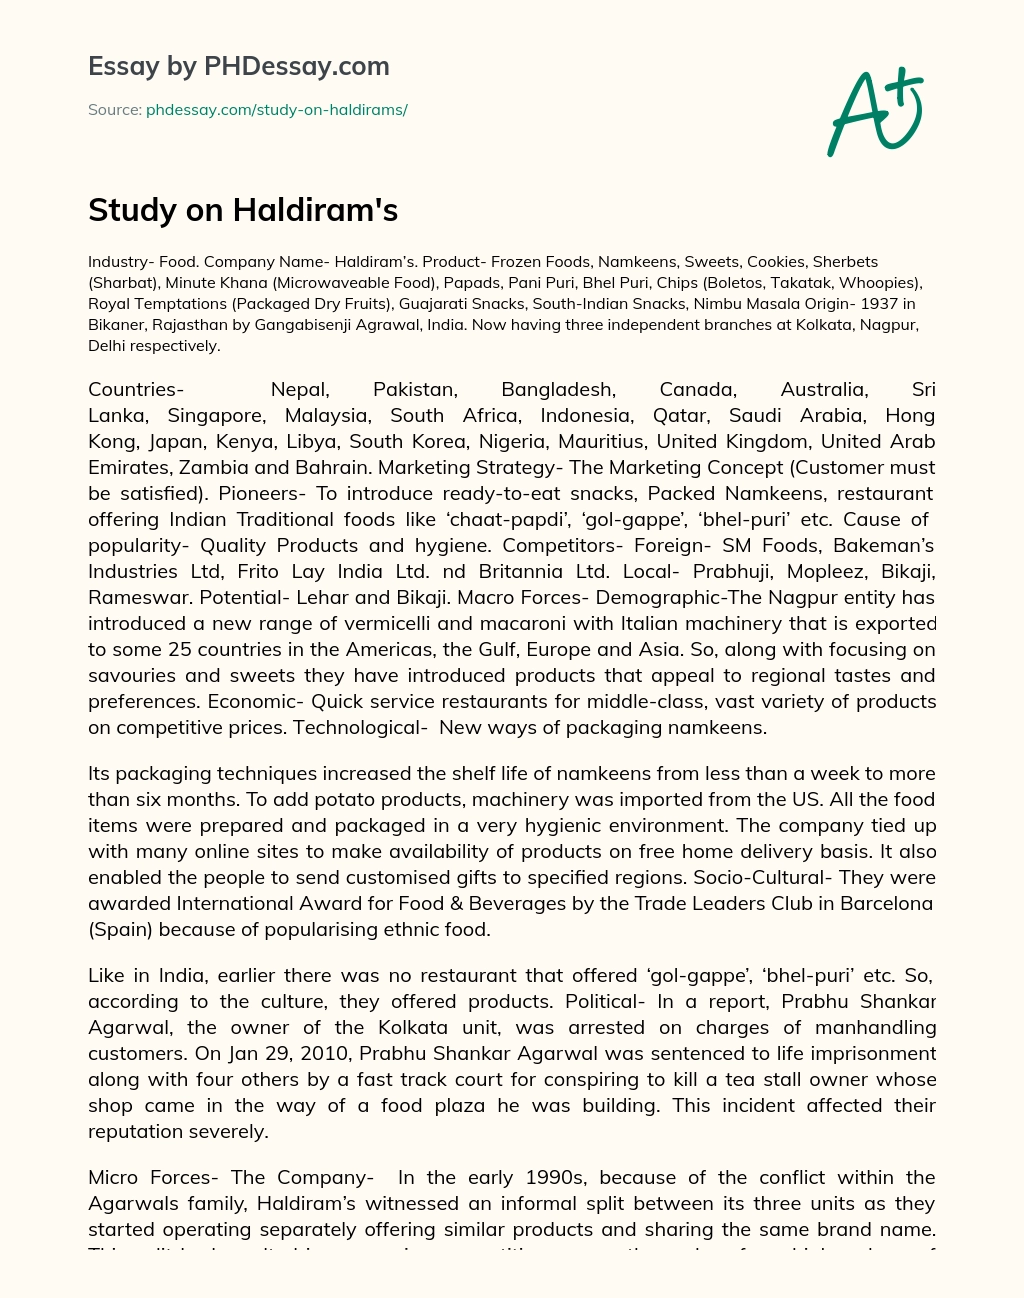 Study on Haldiram’s essay